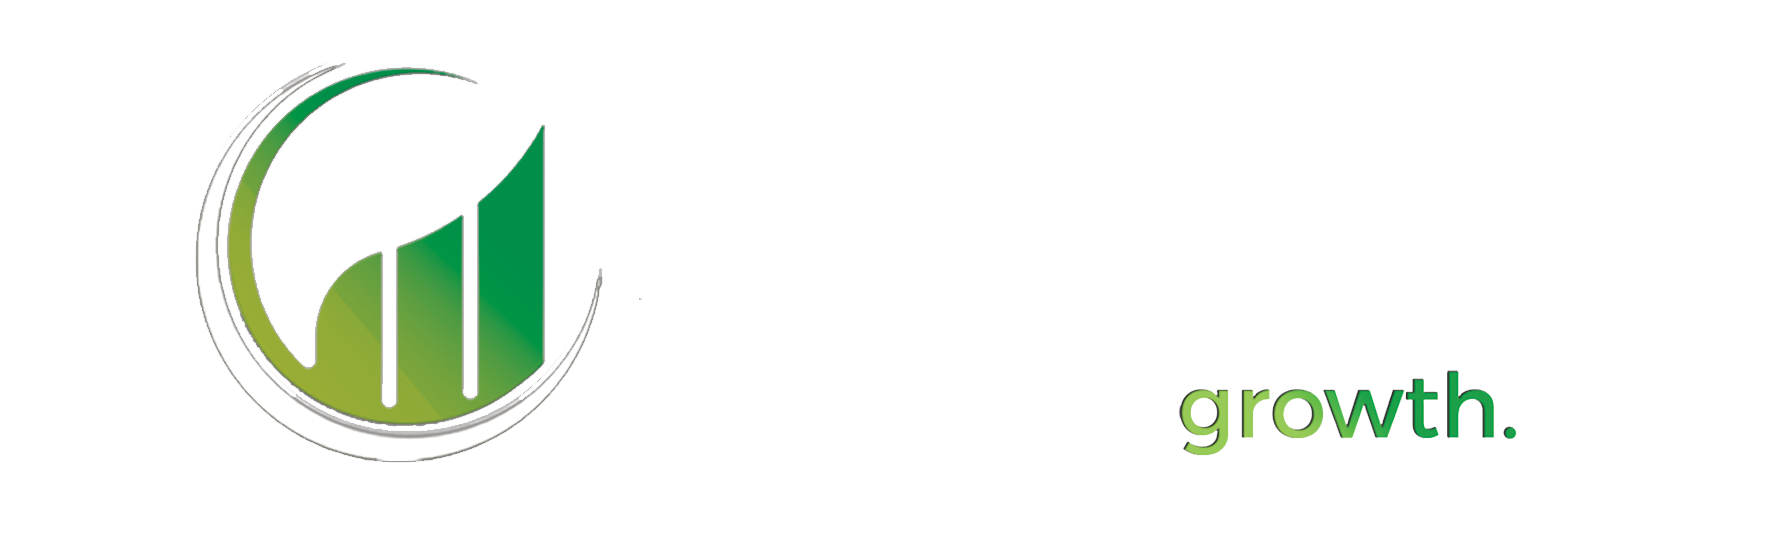 Golf Upgrades